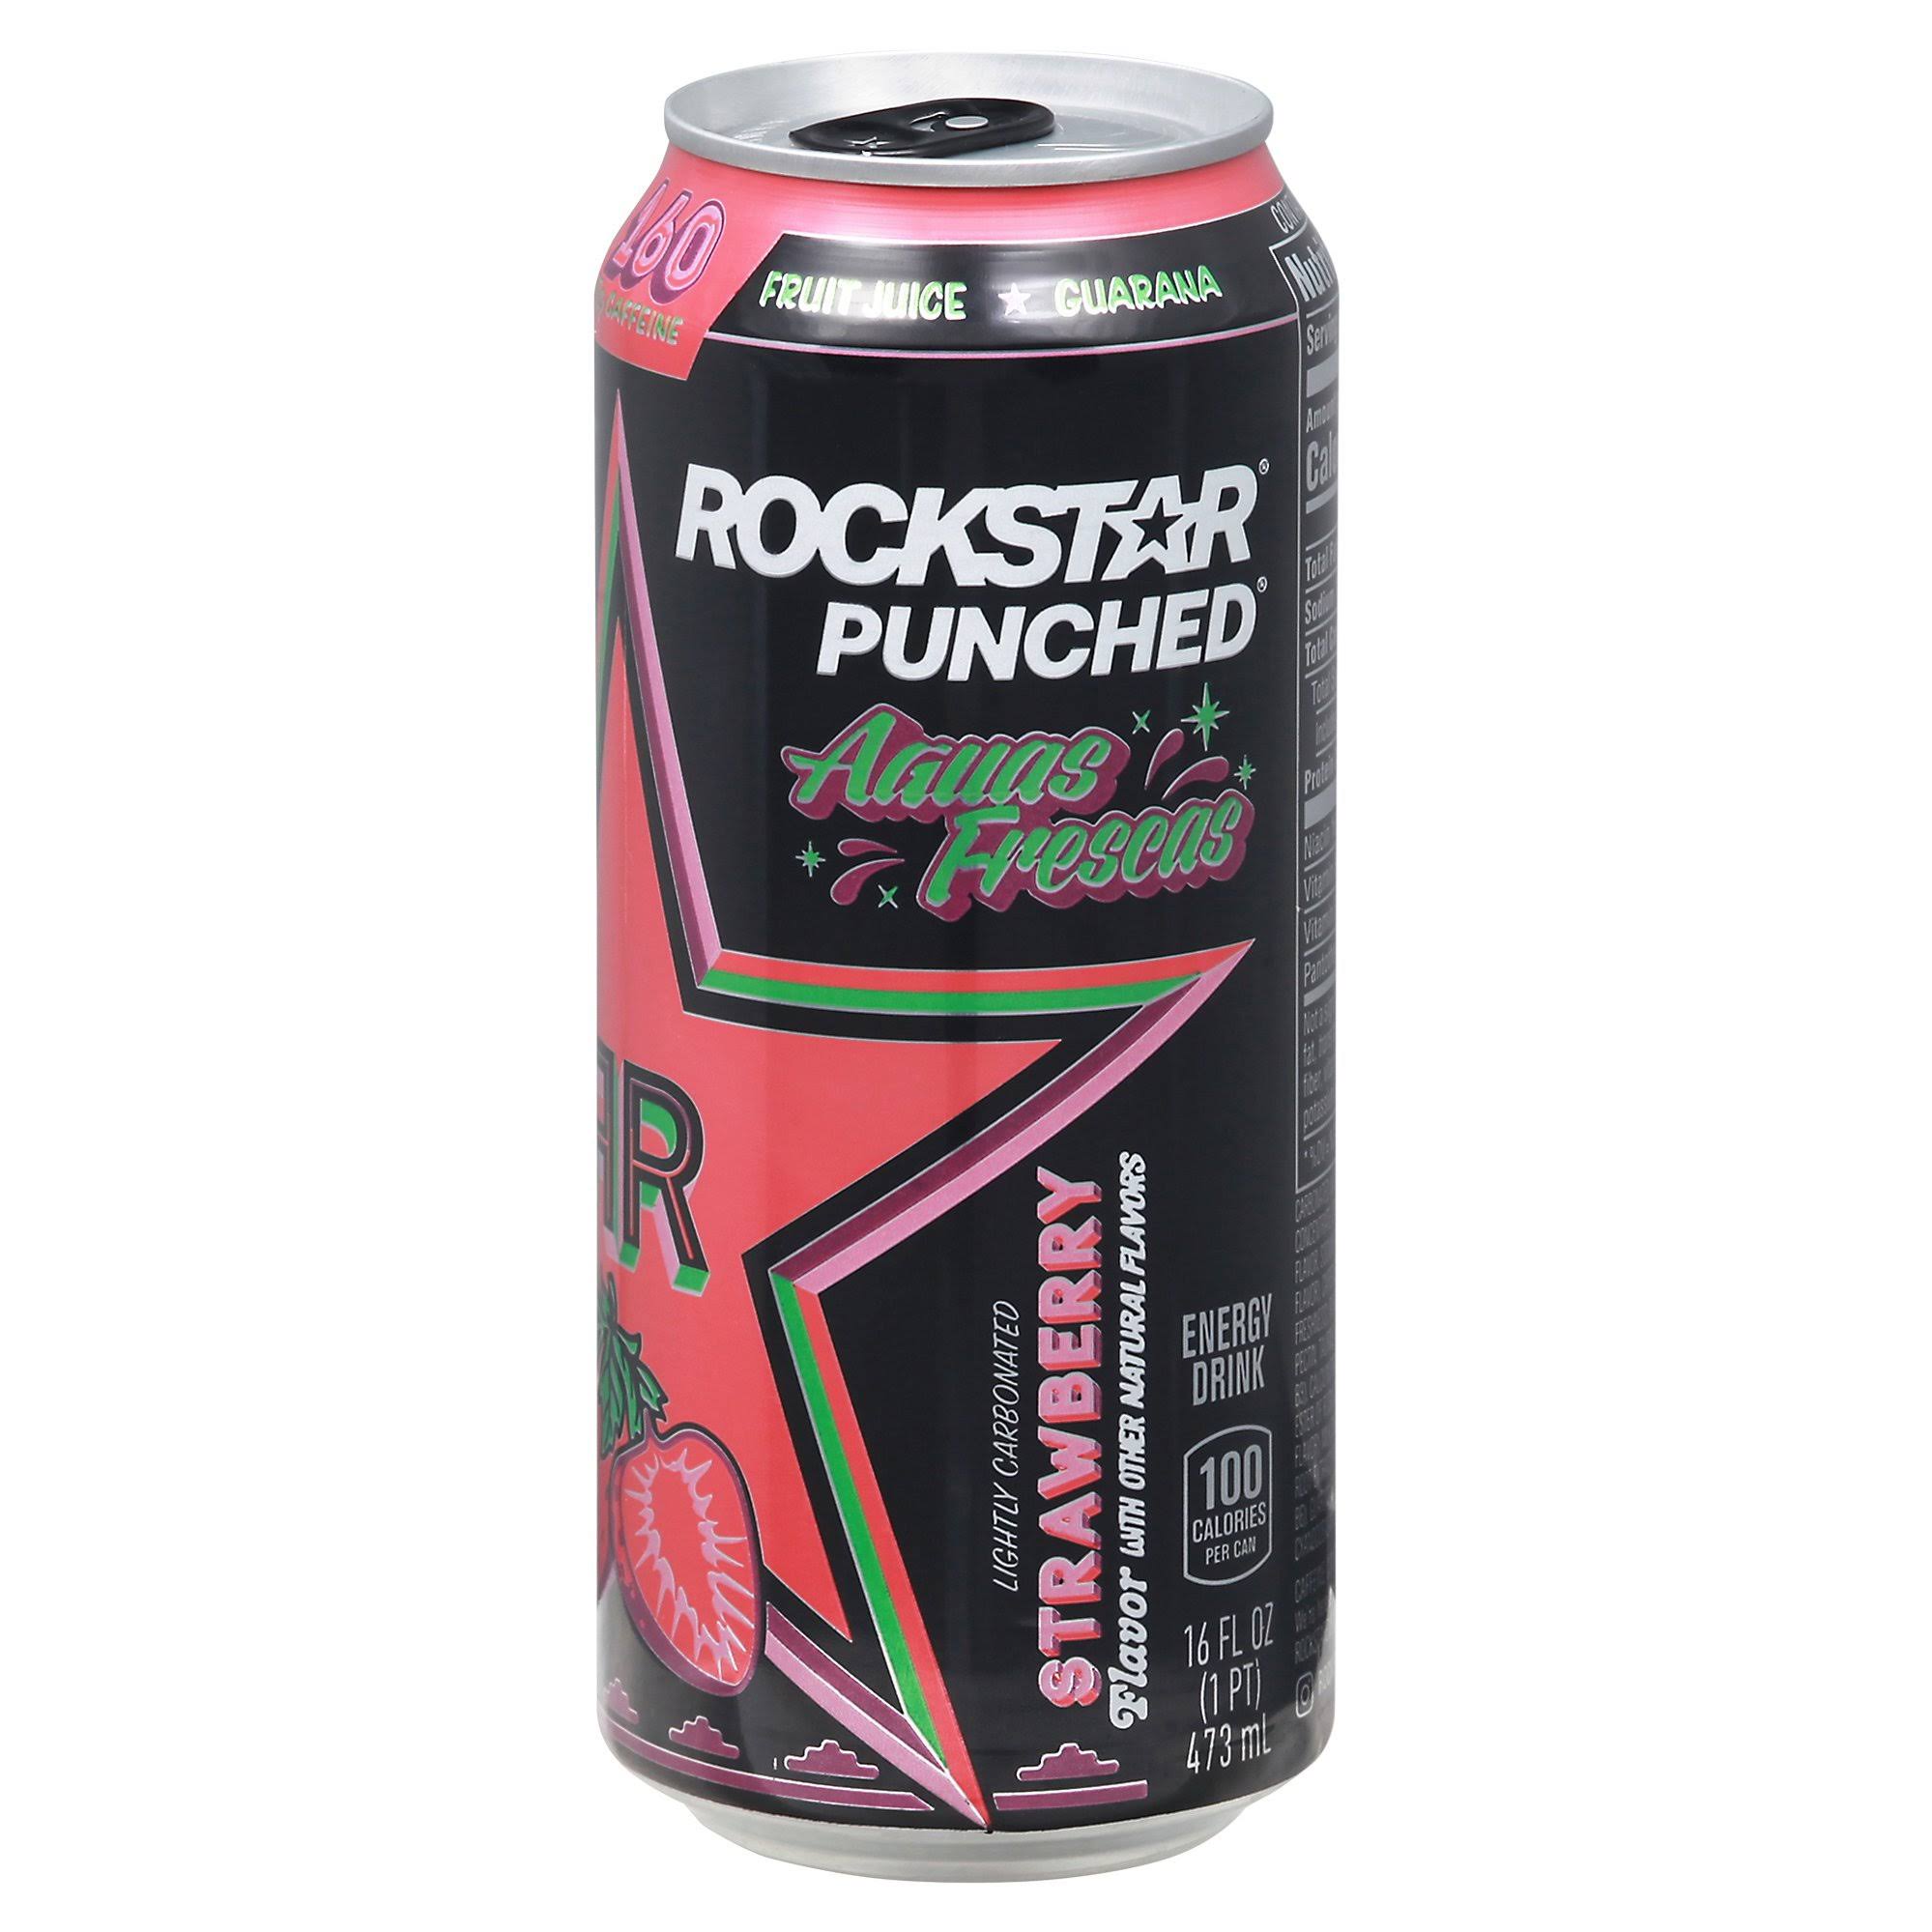 Rockstar Punched Energy Drink, Strawberry Flavor - 16 fl oz